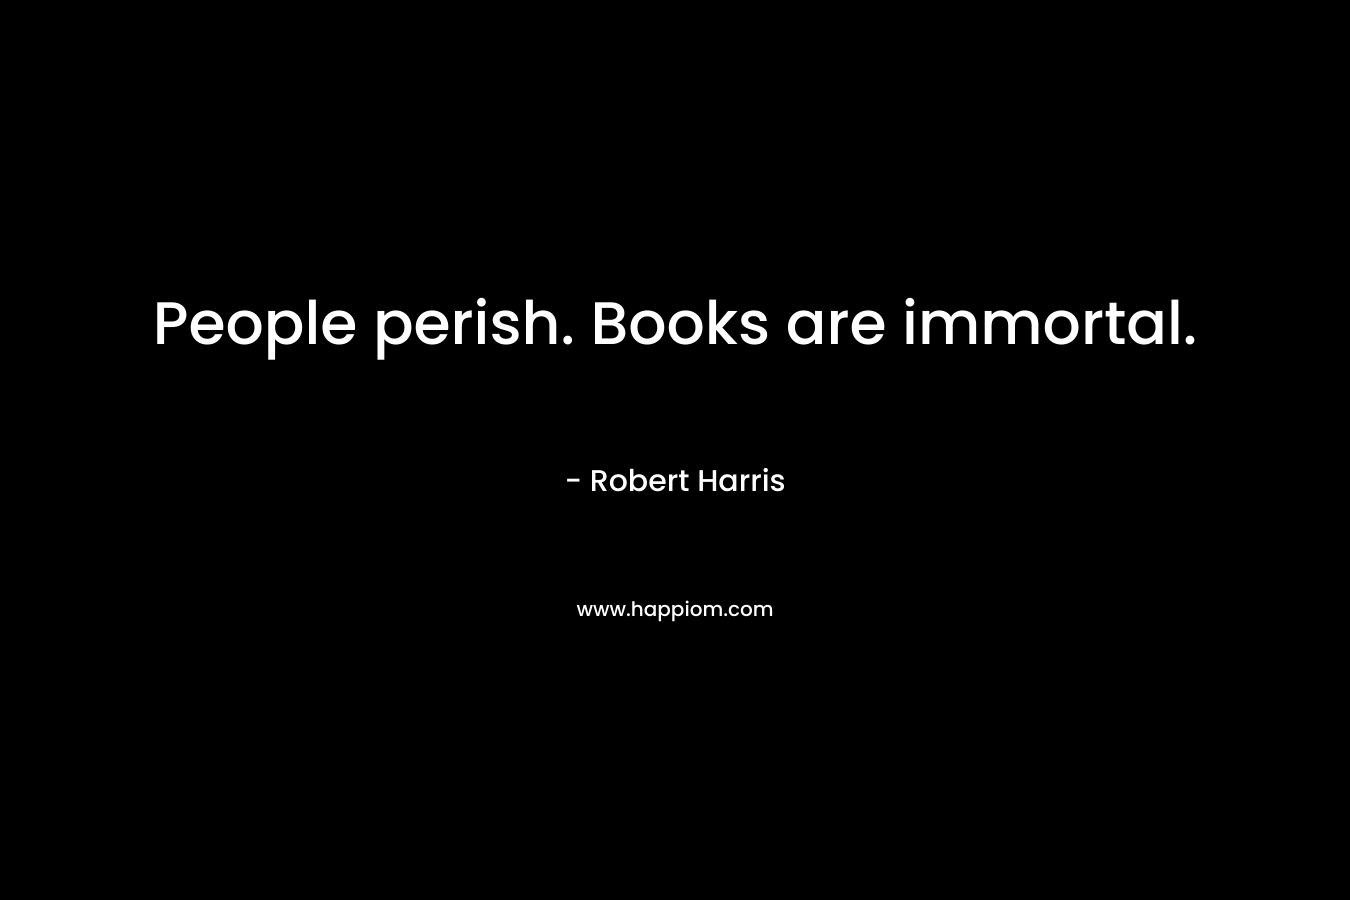 People perish. Books are immortal.